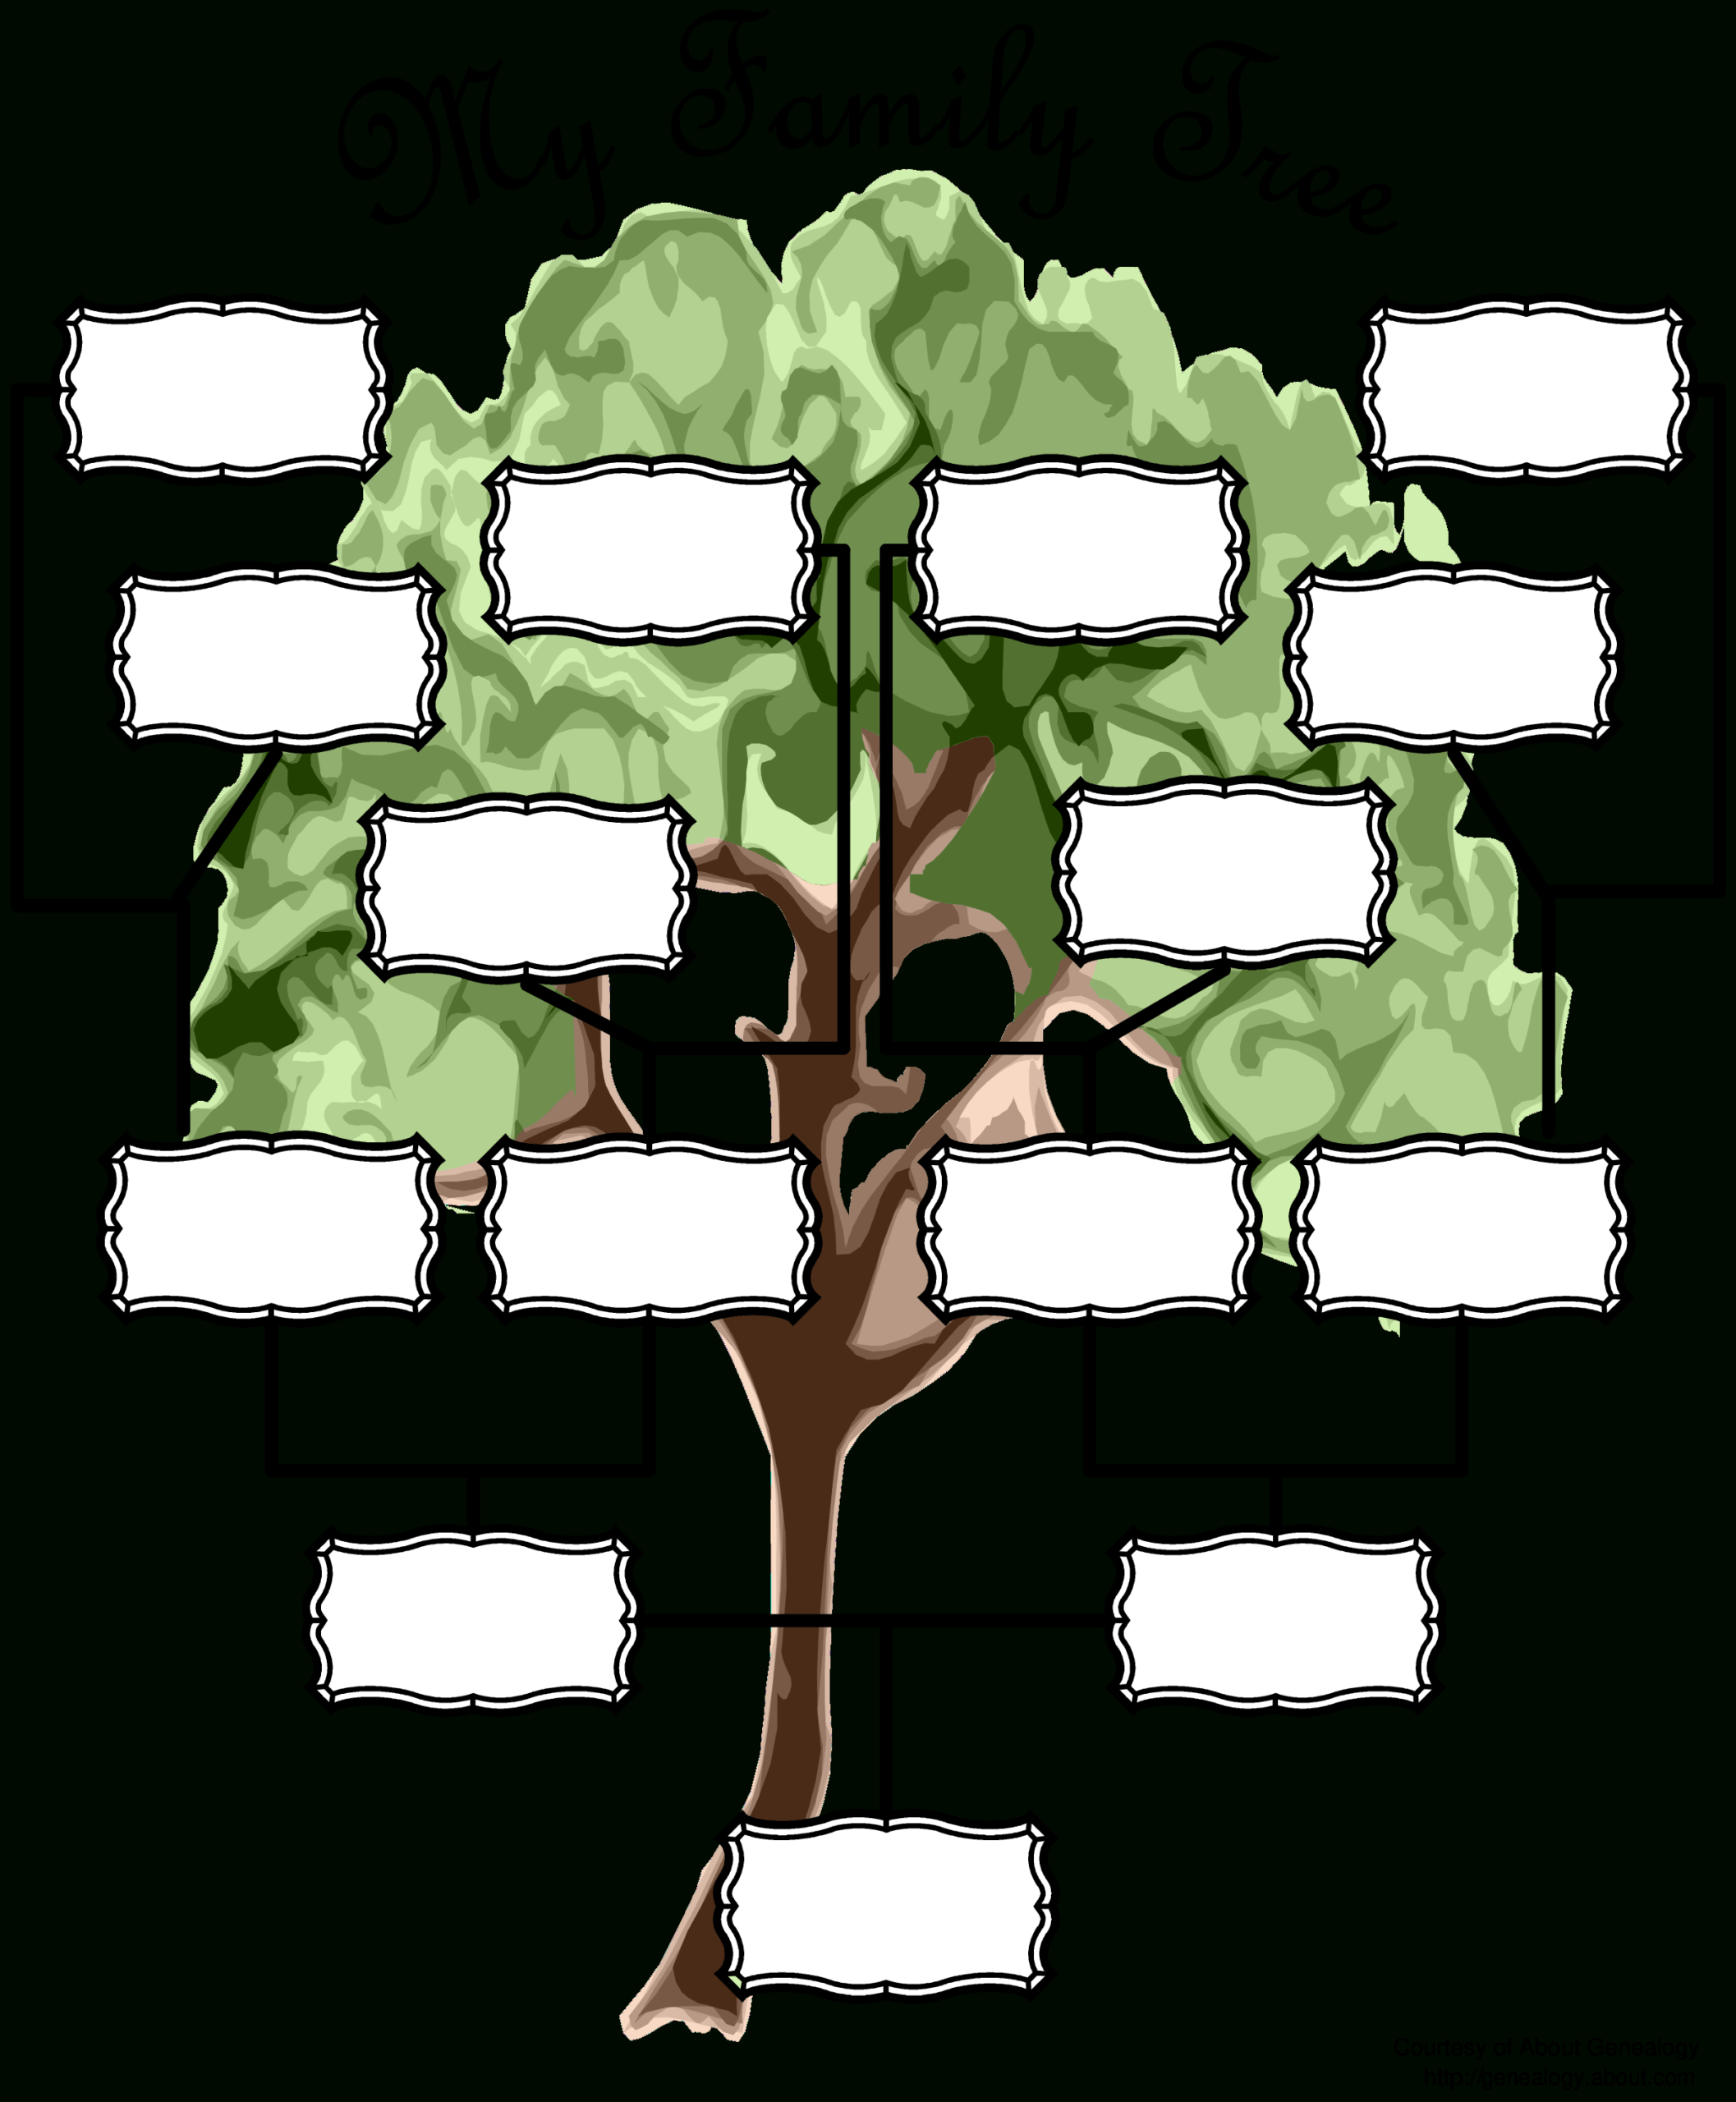 Blank Family Tree Chart | Templates At Allbusinesstemplates For Fill In The Blank Family Tree Template